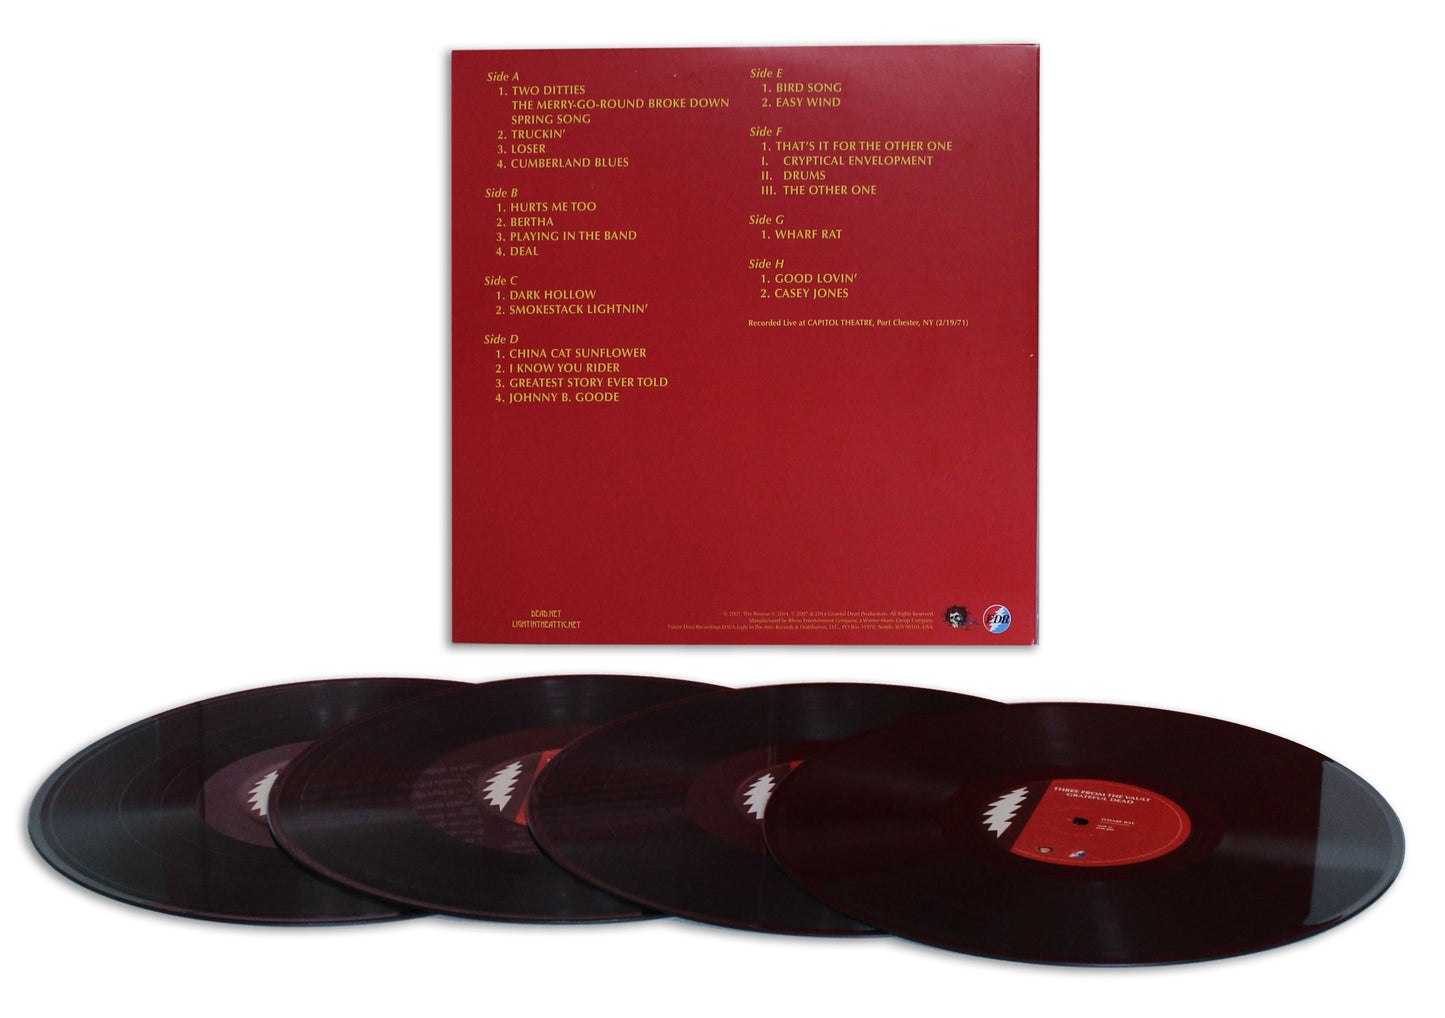 Grateful Dead -Three From The Vault 4 Vinyl LPs